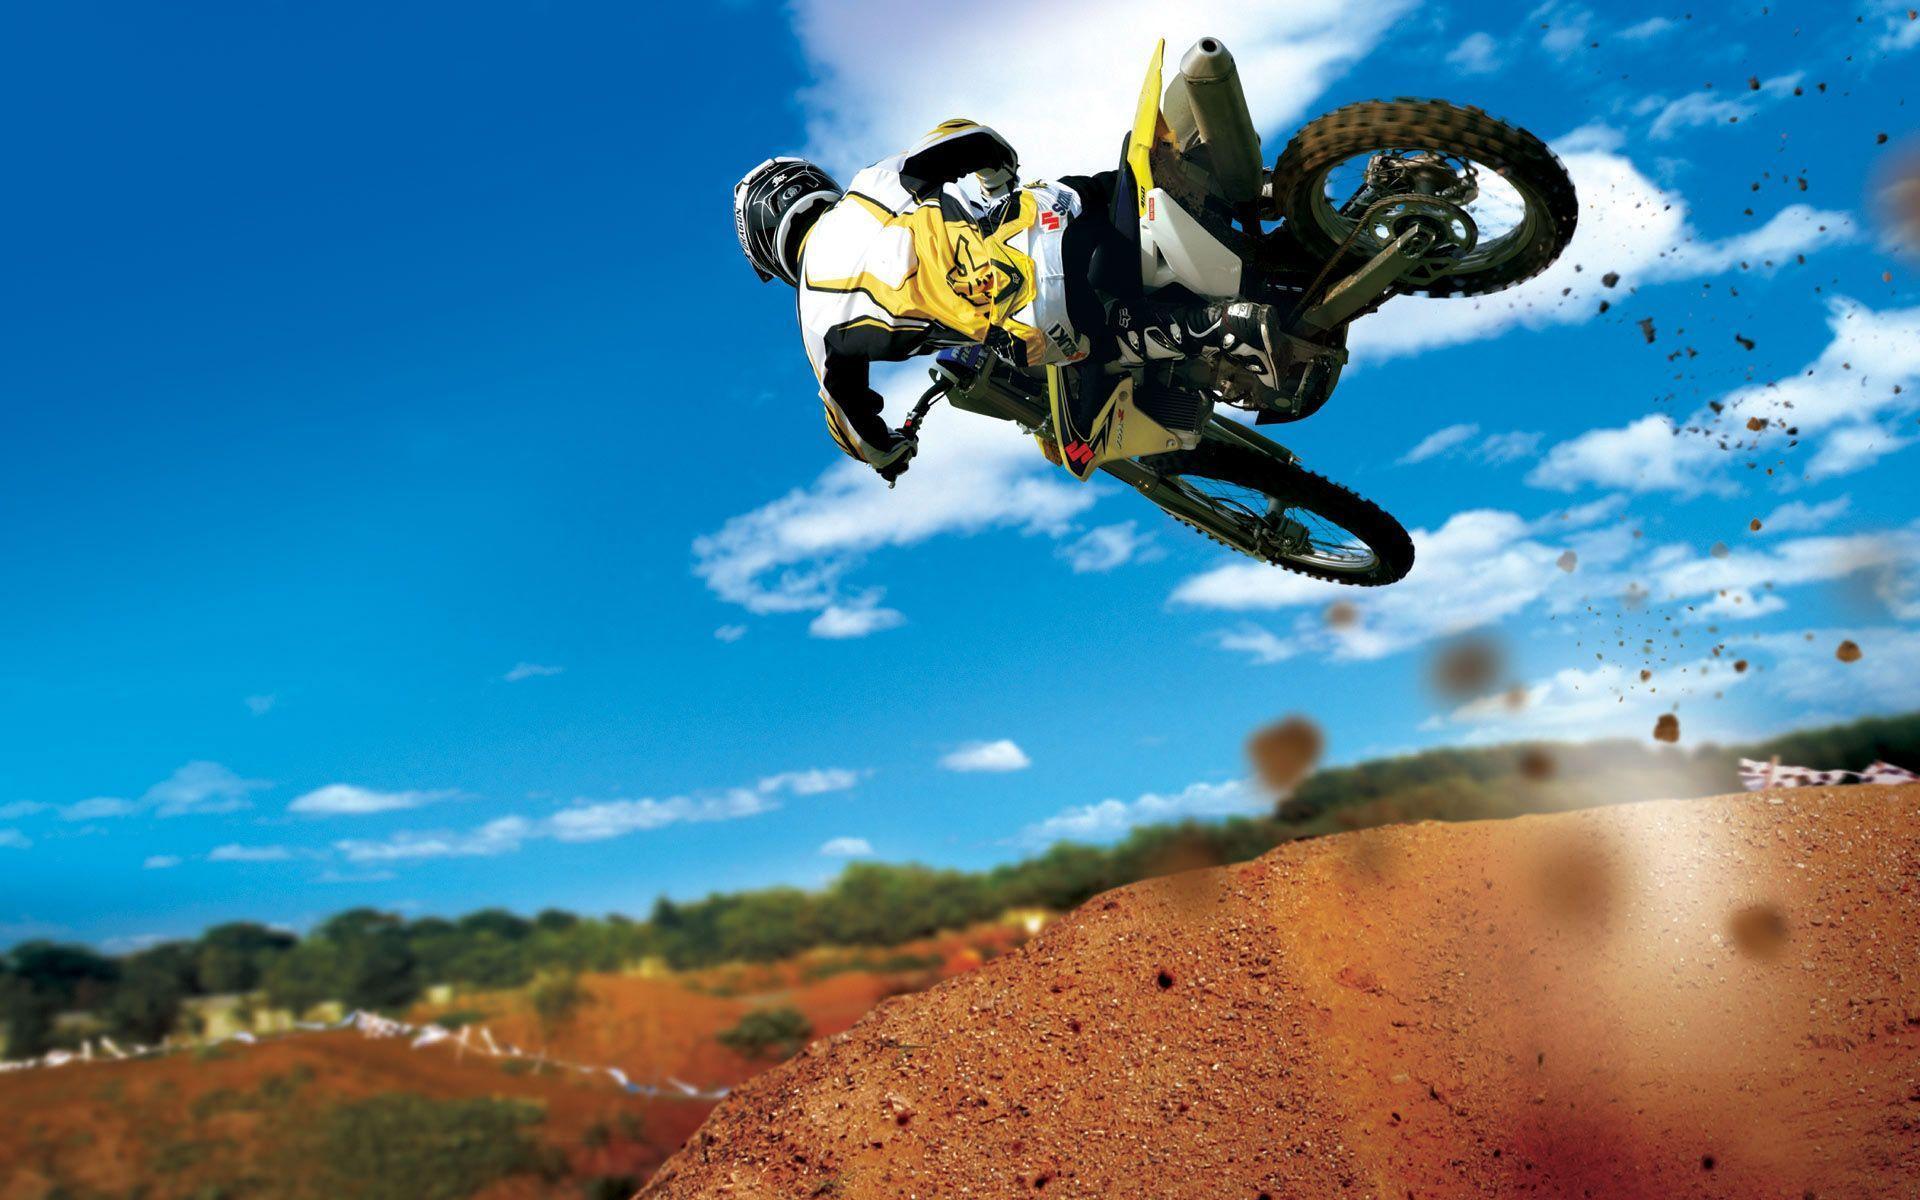 Motocross Action Shots Wallpaper for Desktop. Free Download